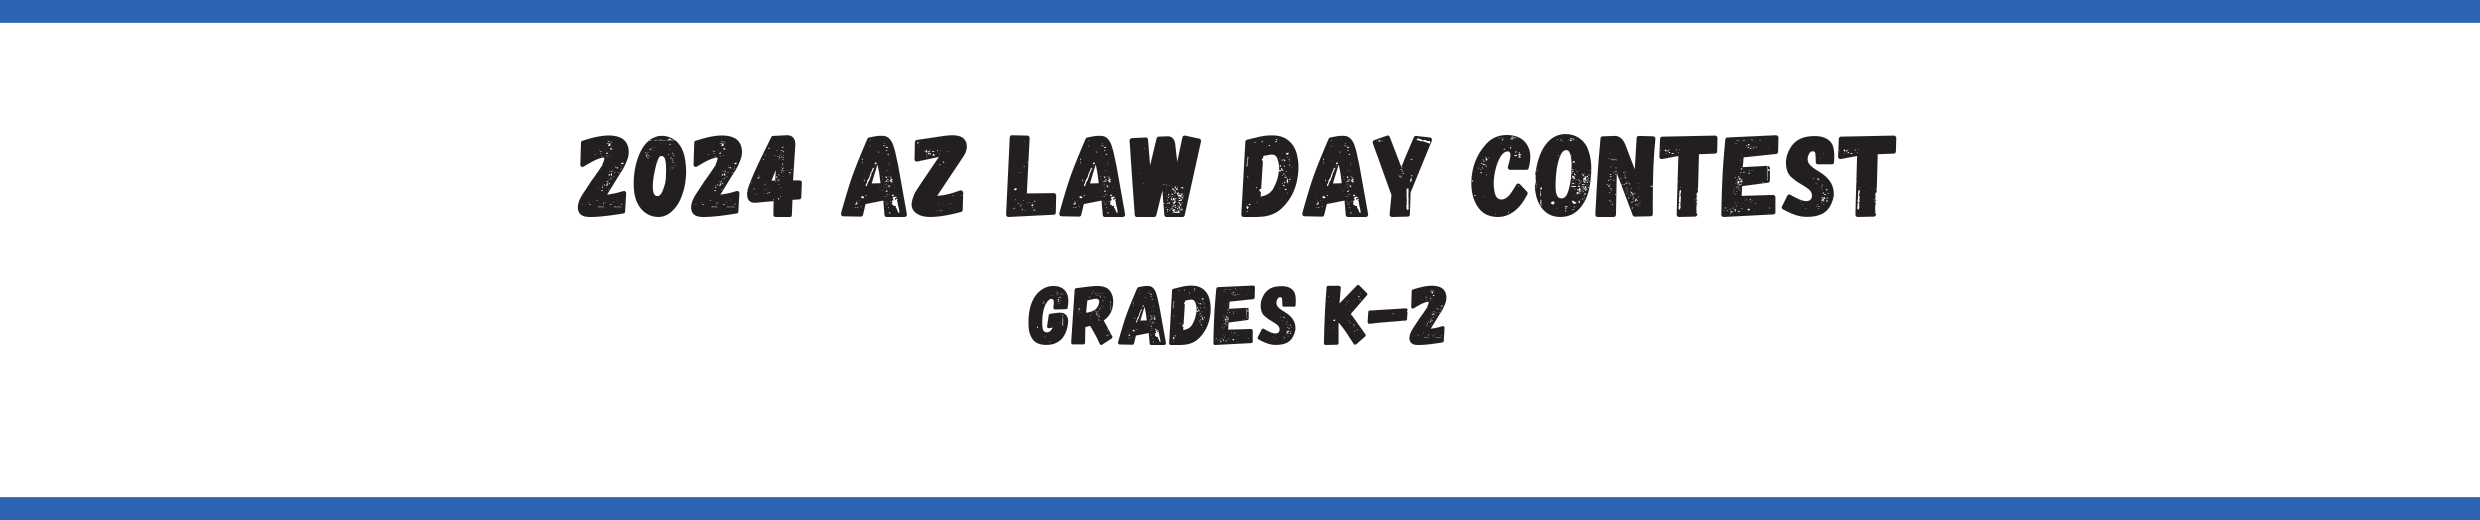 2024 Law Day Contest Grades K-2